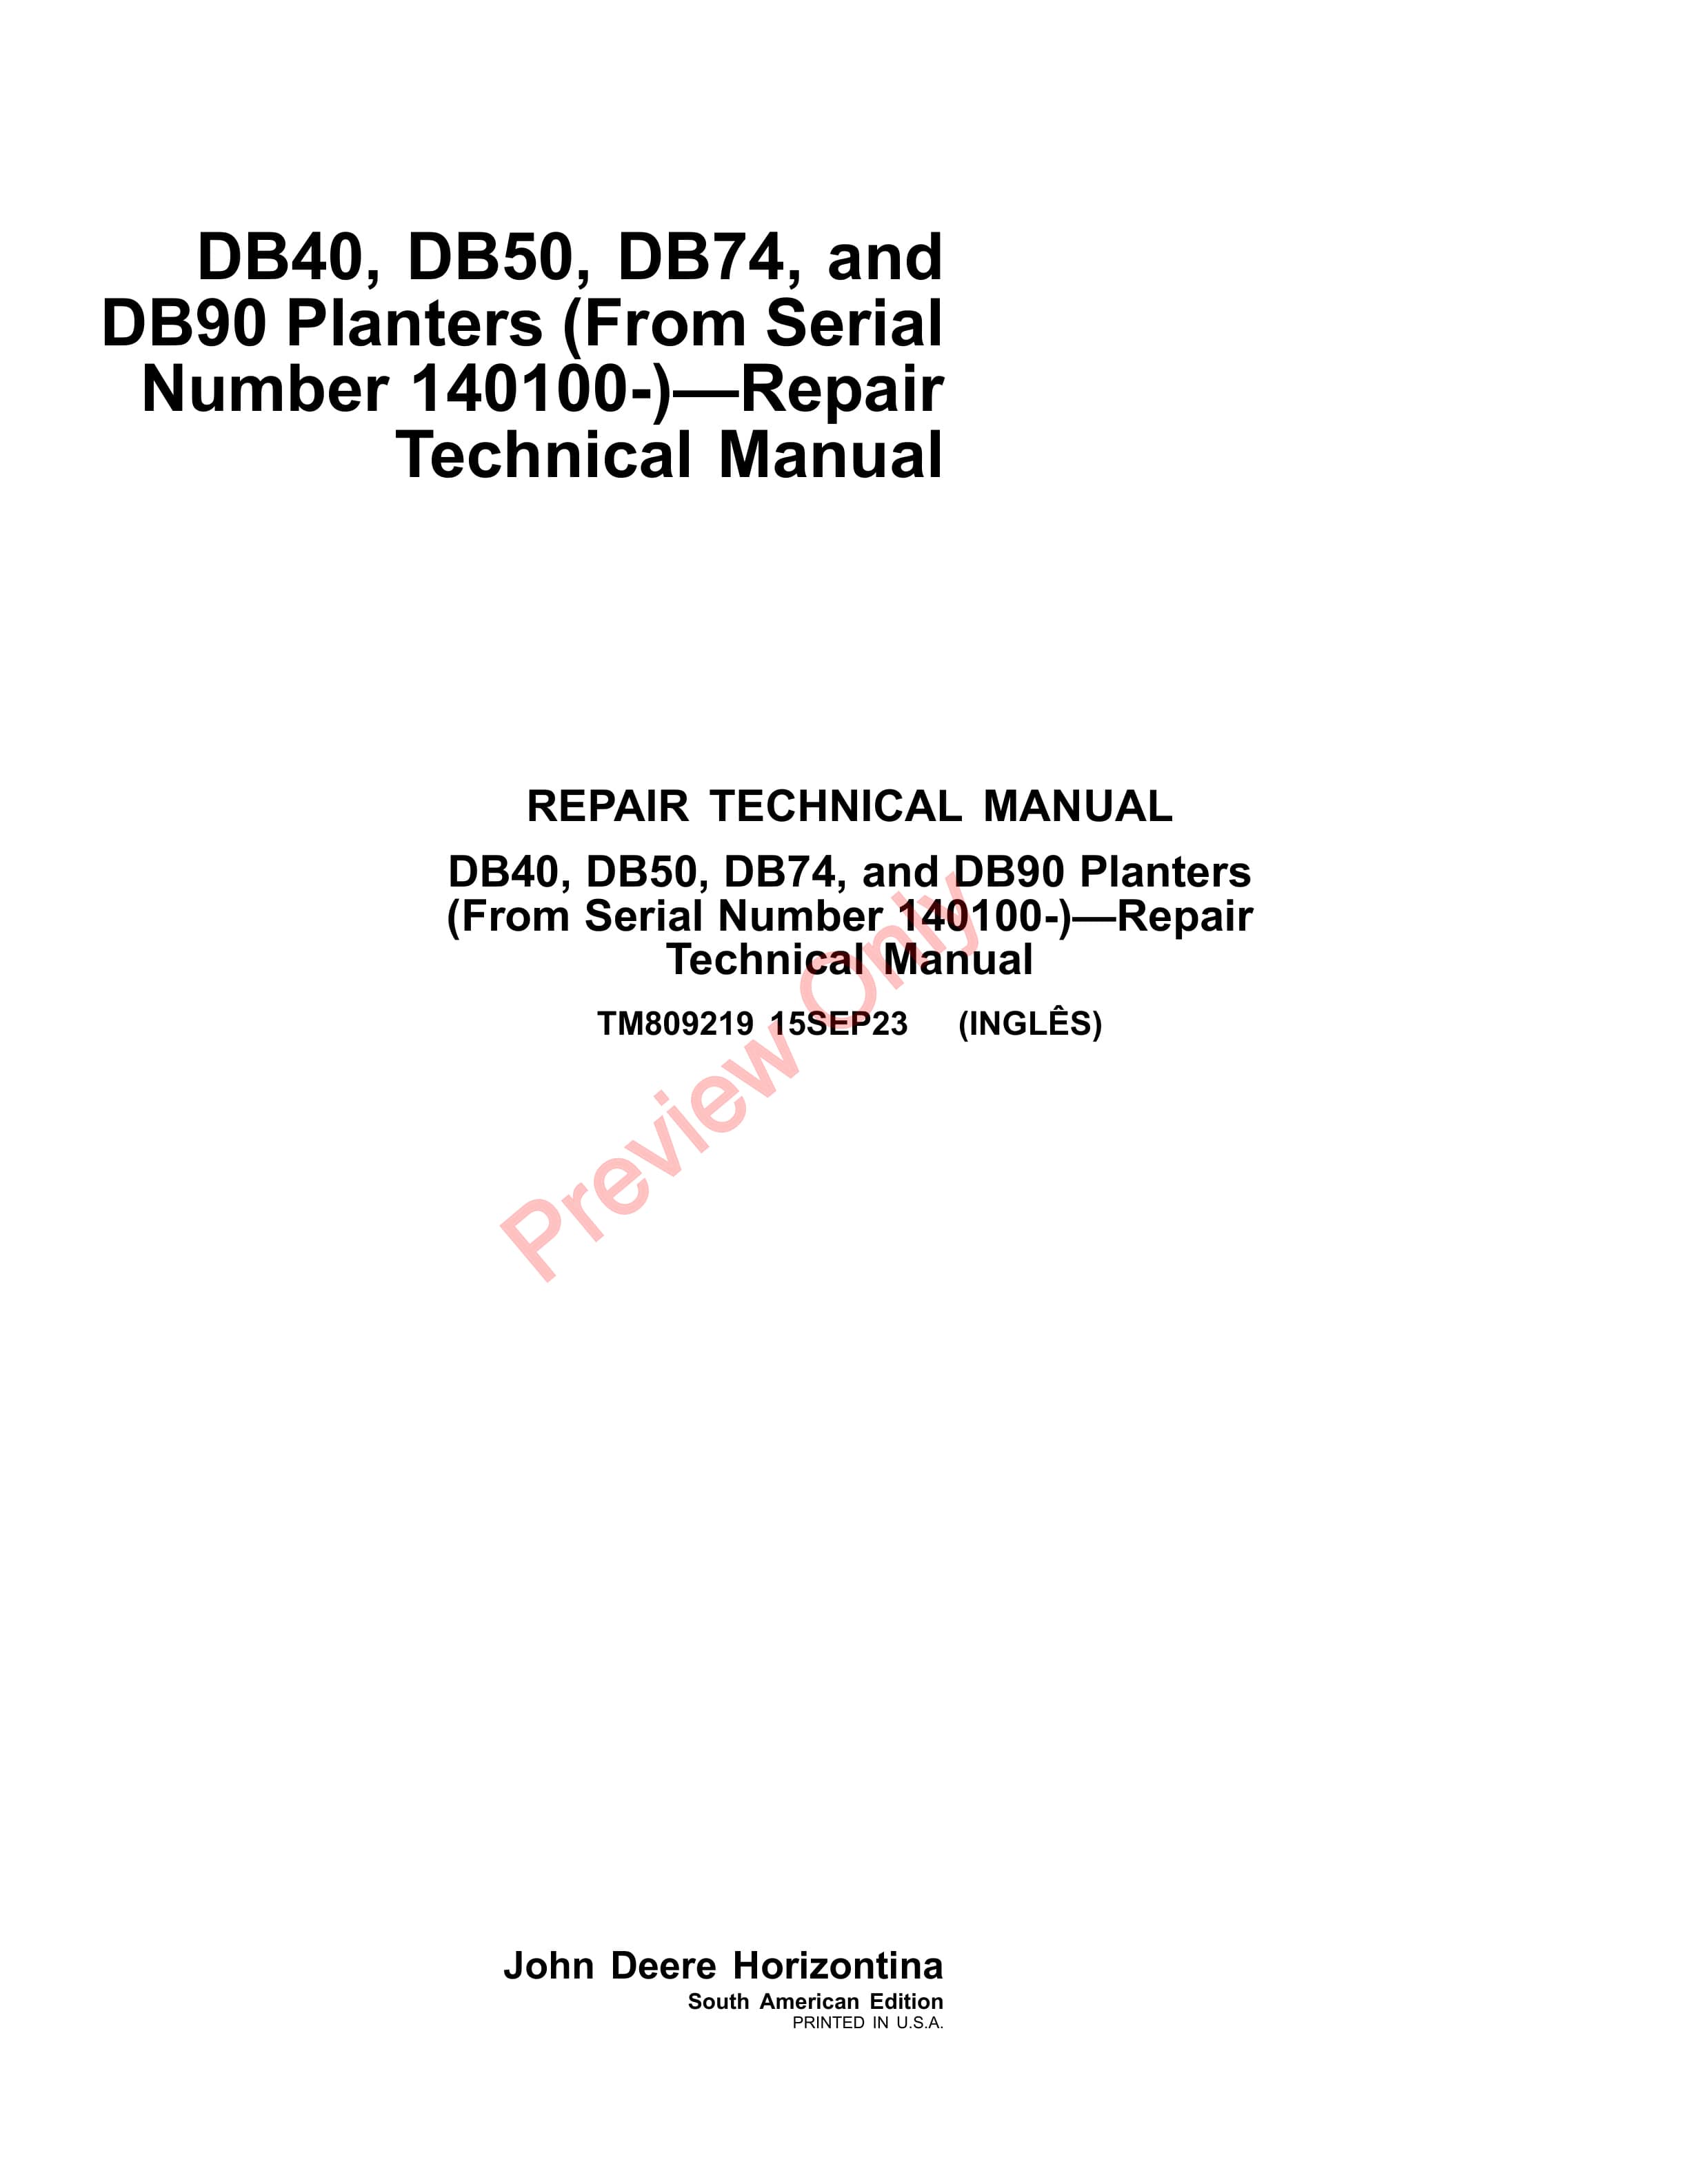 John Deere DB40 DB50 DB74 DB90 Planters 140100 Repair Technical Manual TM809219 15SEP23 1